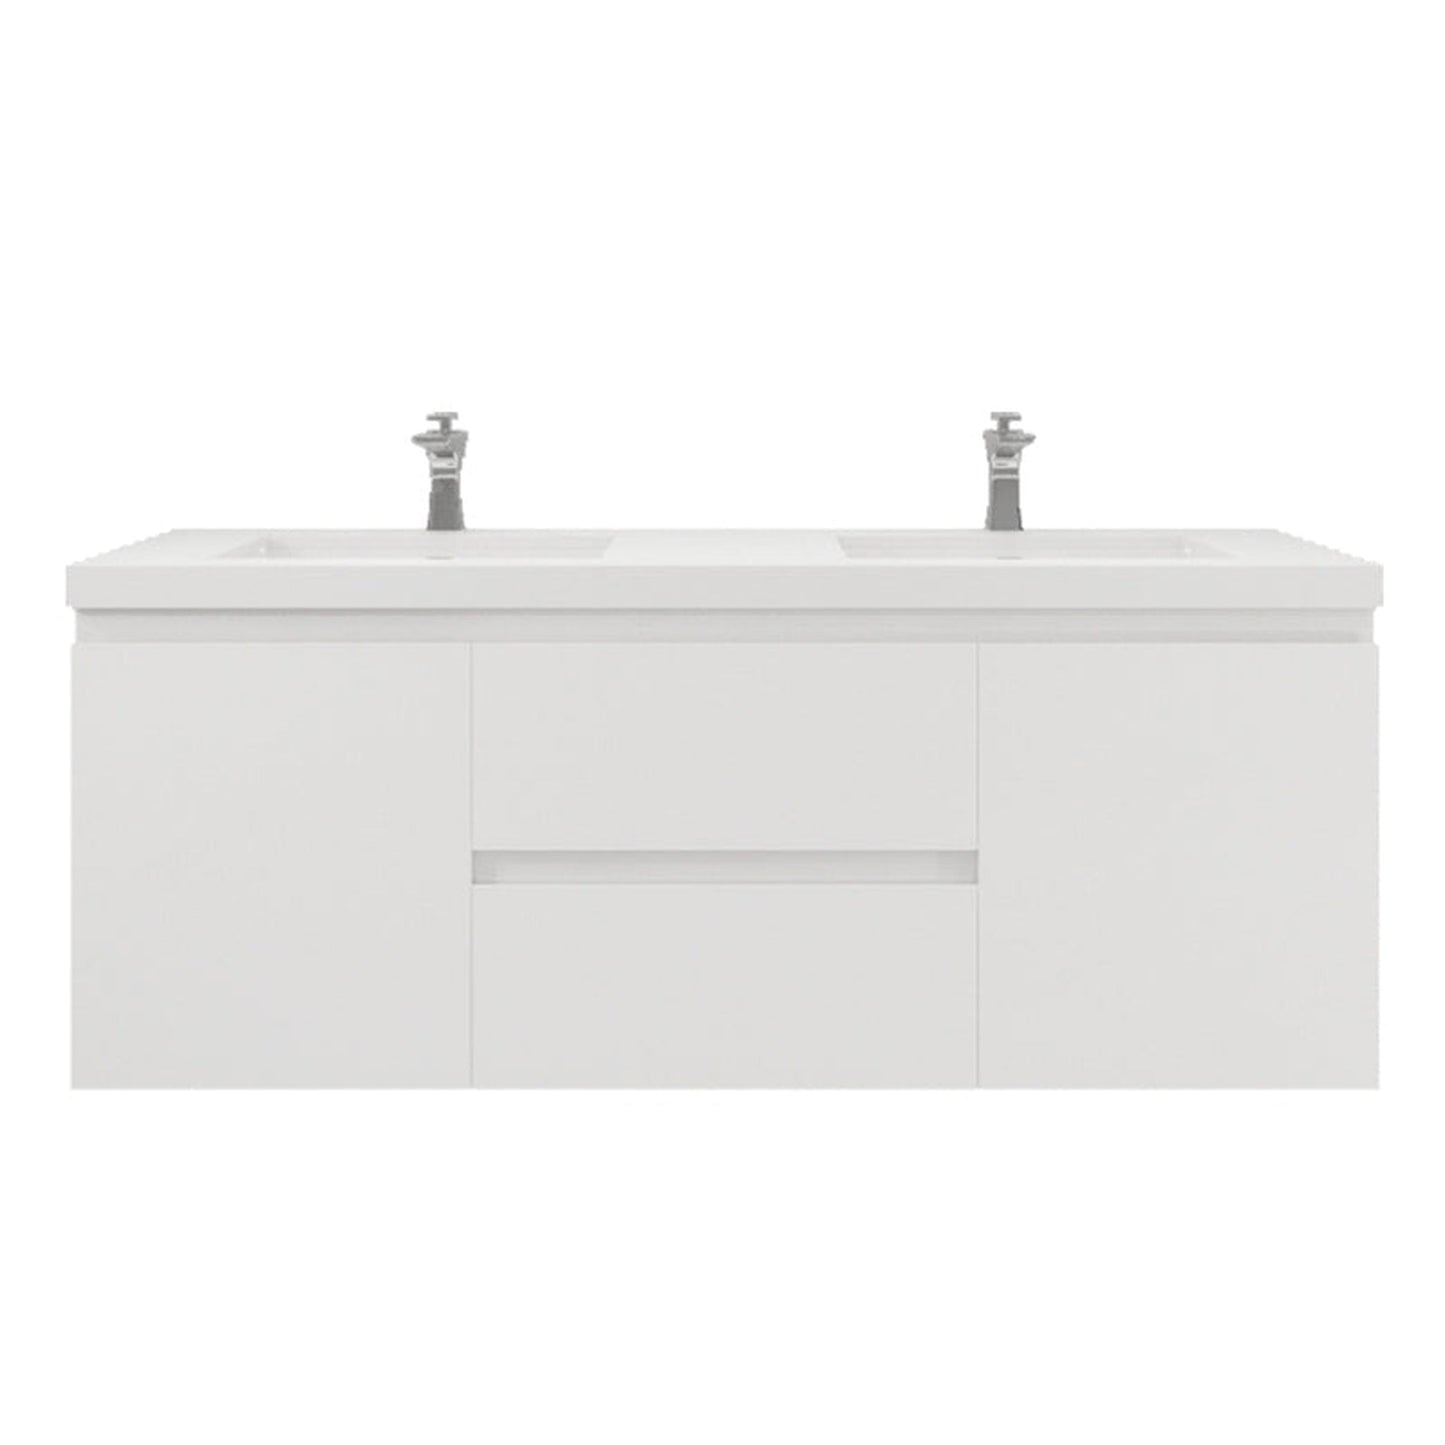 Moreno Bath Bohemia Lina 60" High Gloss White Wall-Mounted Vanity With Double Reinforced White Acrylic Sinks